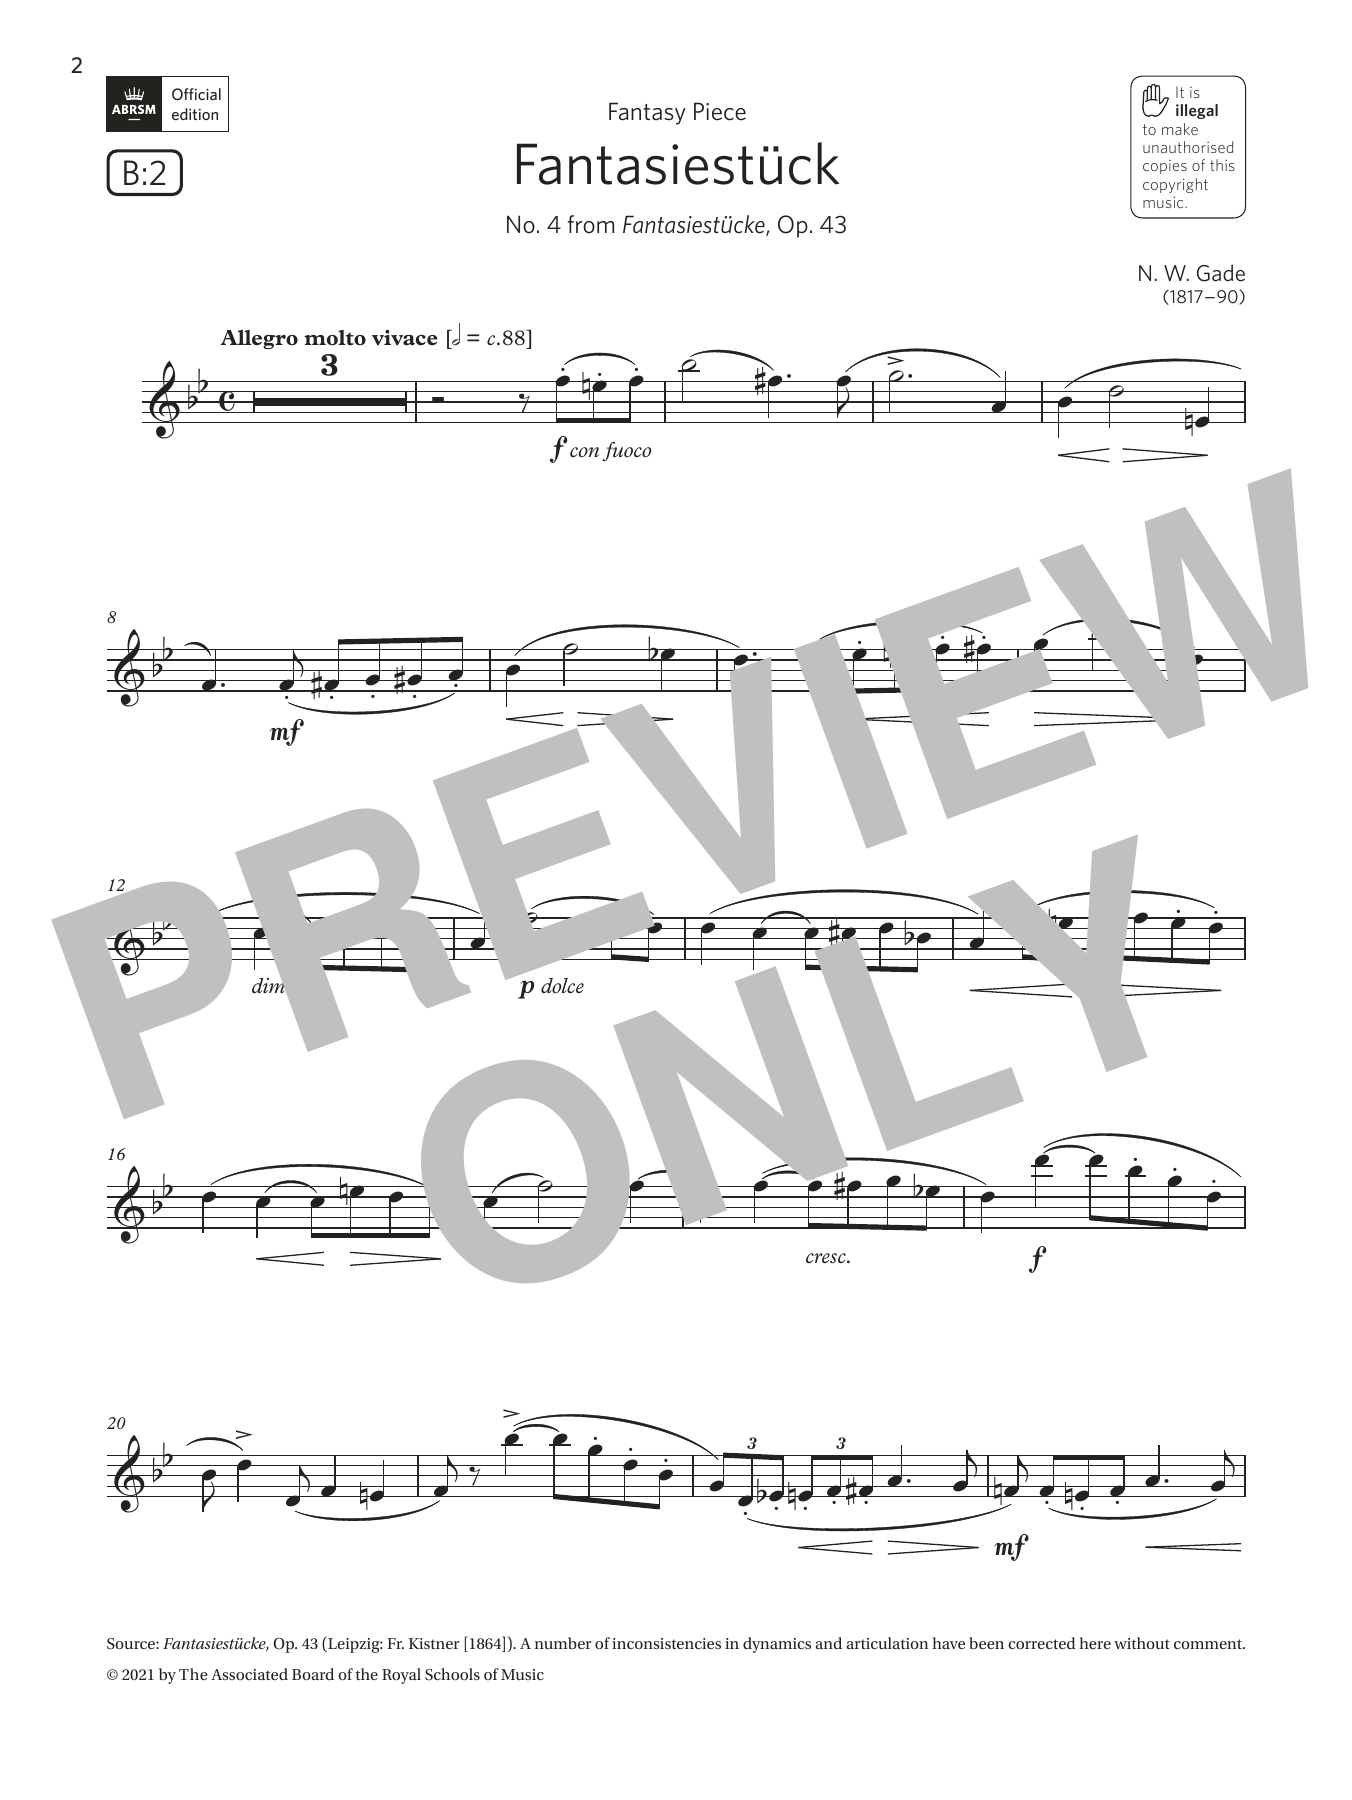 Niels Wilhelm Gade Fantasiestück (No. 4 from Fantasiestücke) (Grade 6 List B2 ABRSM Clarinet syllabus from 2022) Sheet Music Notes & Chords for Clarinet Solo - Download or Print PDF